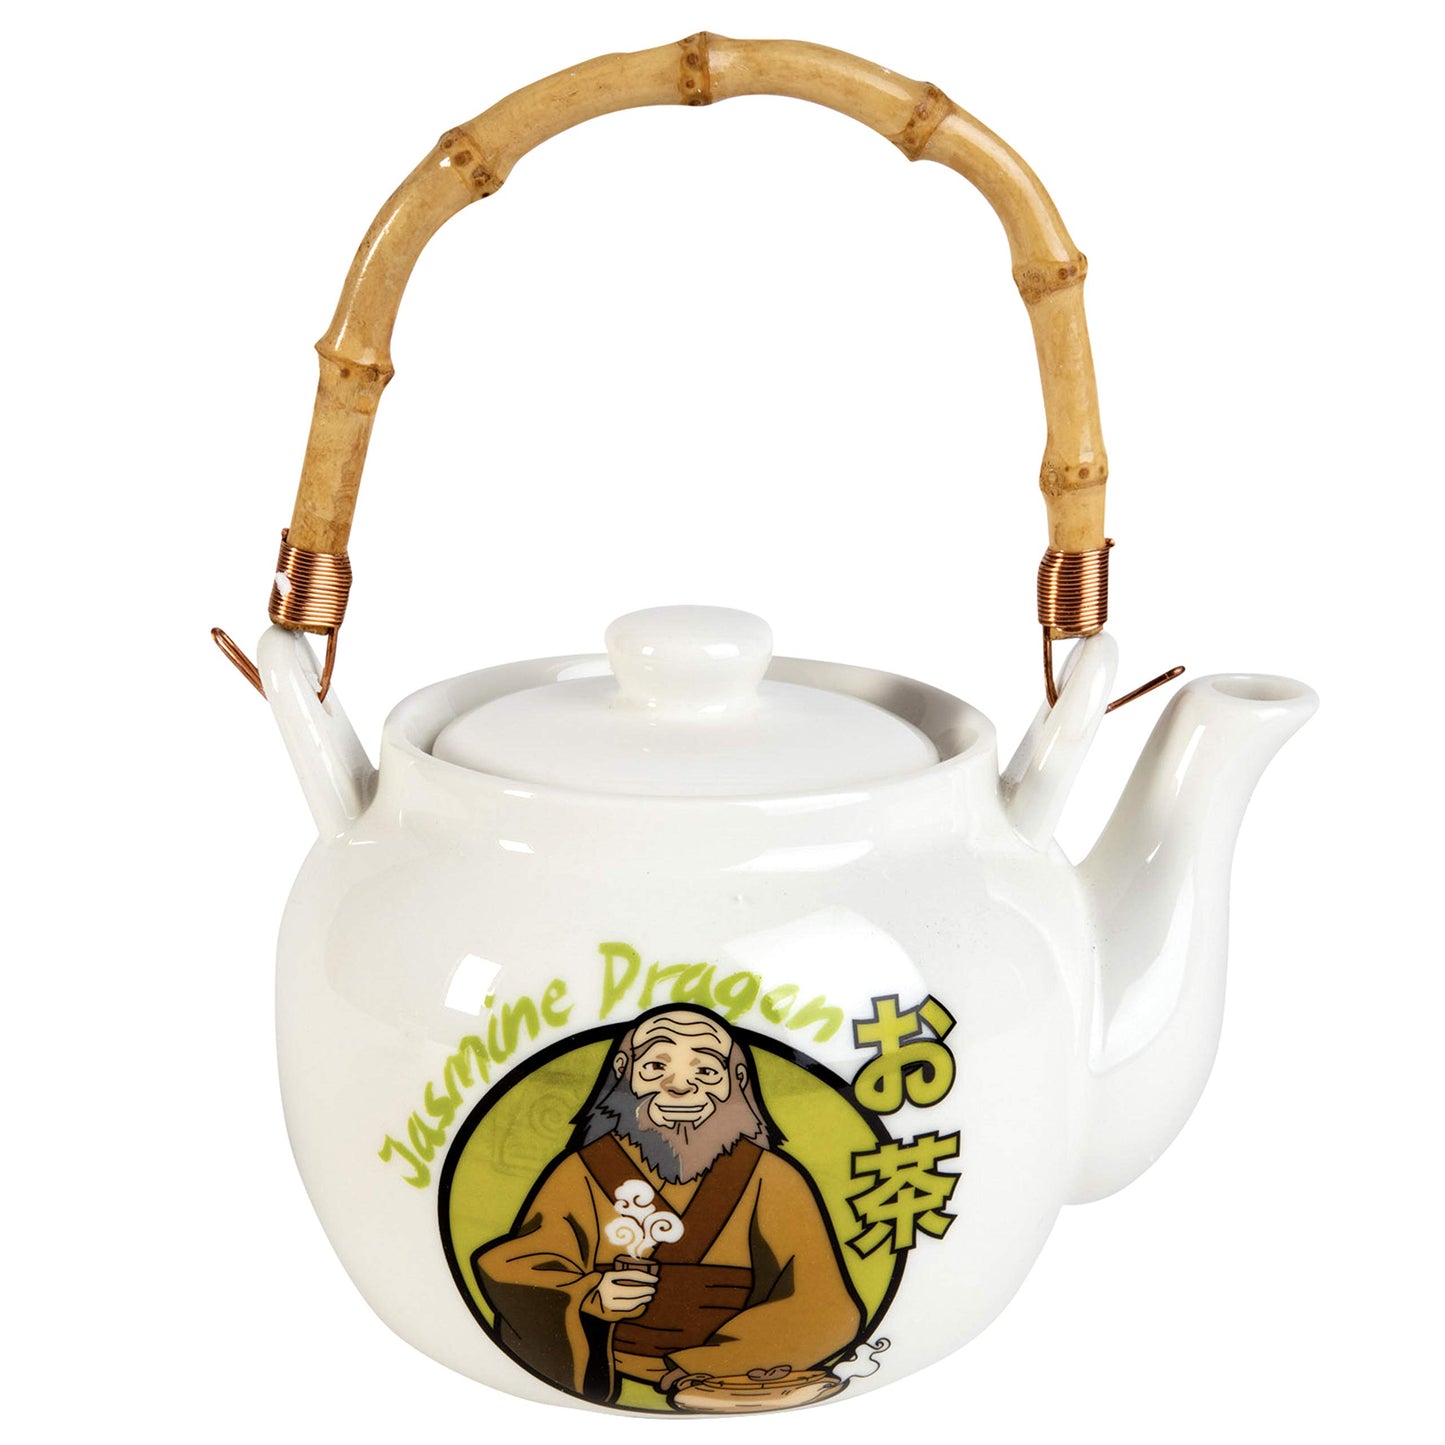 Avatar: The Last Airbender The Jasmine Dragon Tea Set - Ceramic Teapot & Tea Cup - Great Avatar Gift for Men and Women